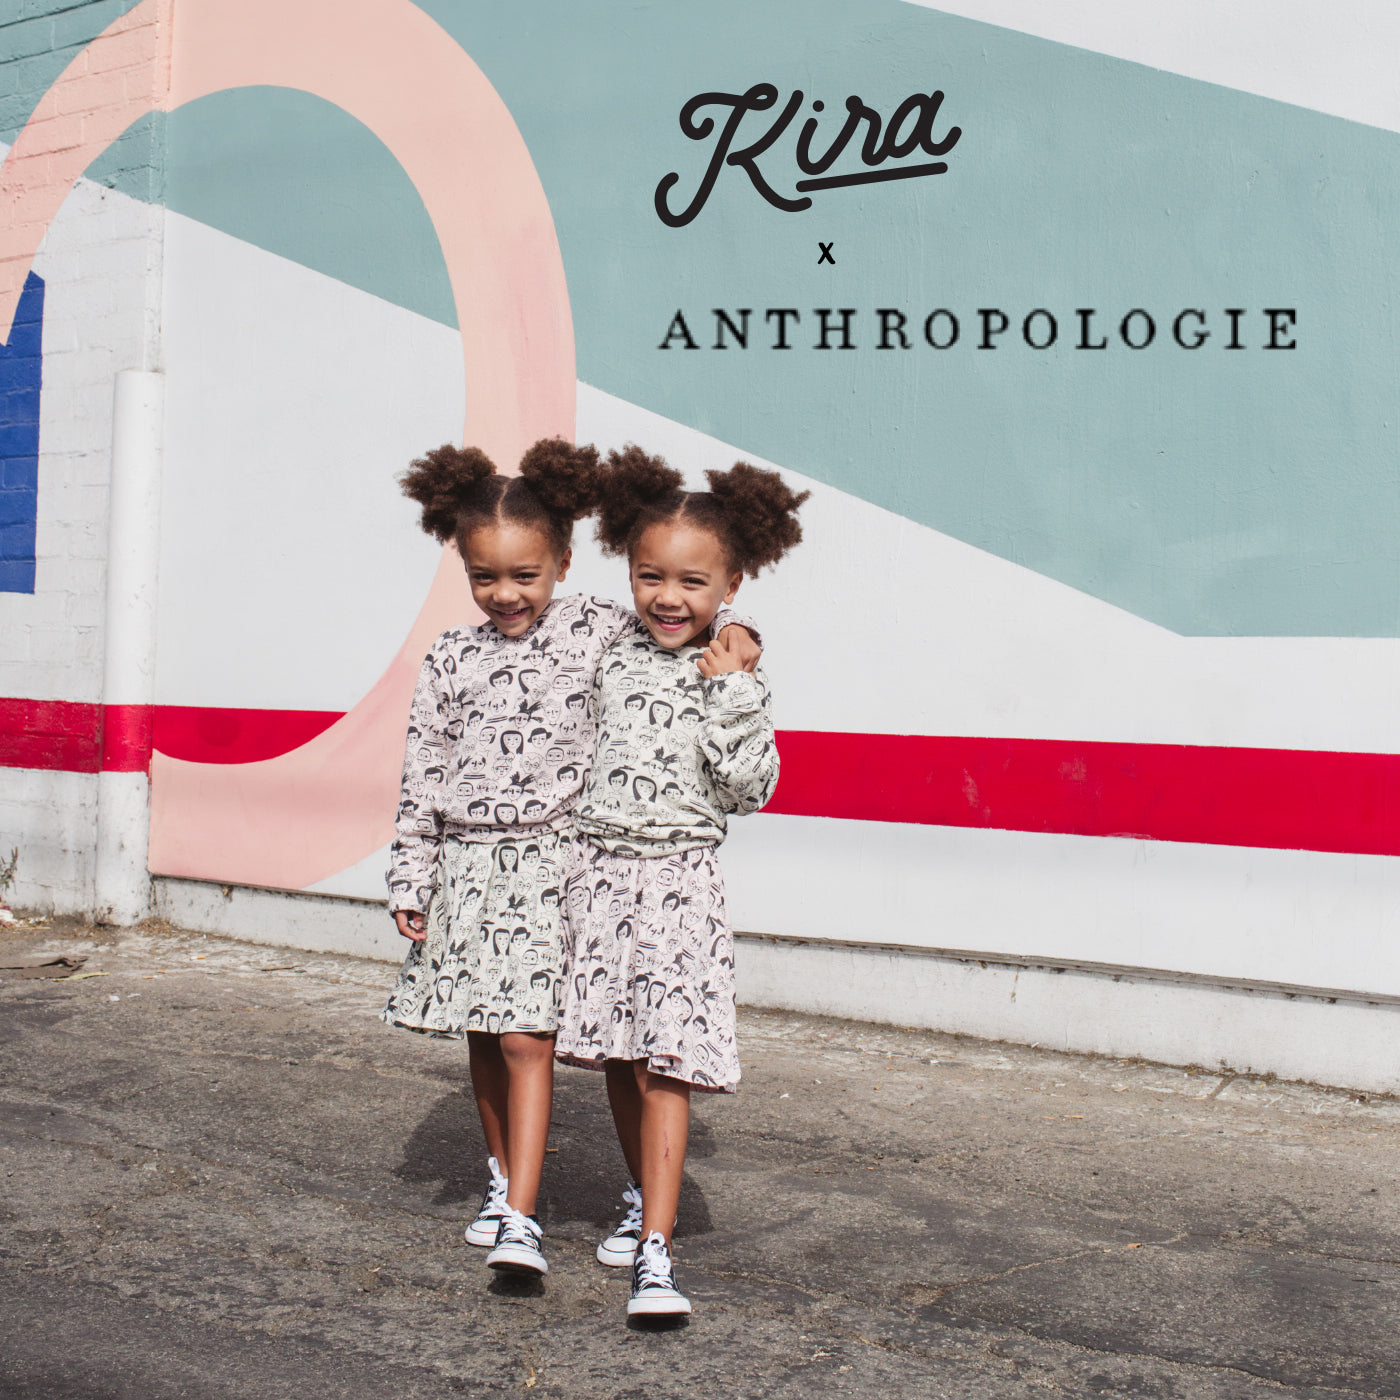 Nov 17: Kira x Anthropologie, Palo Alto, CA